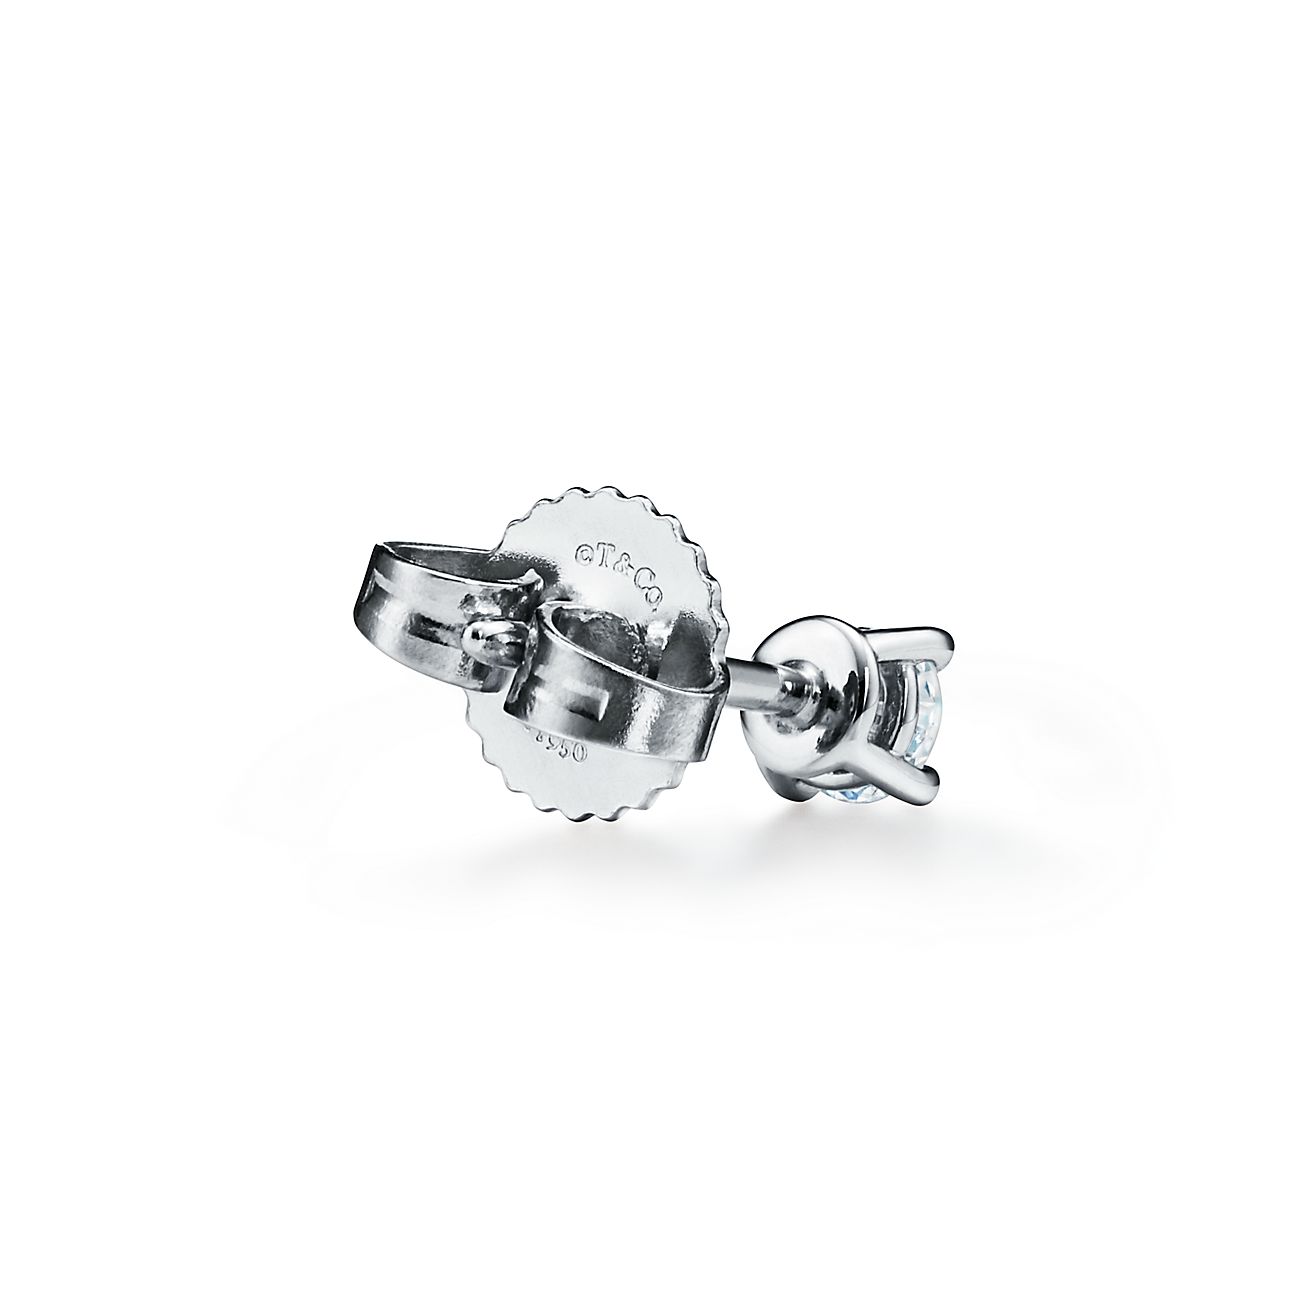 tiffany small diamond earrings